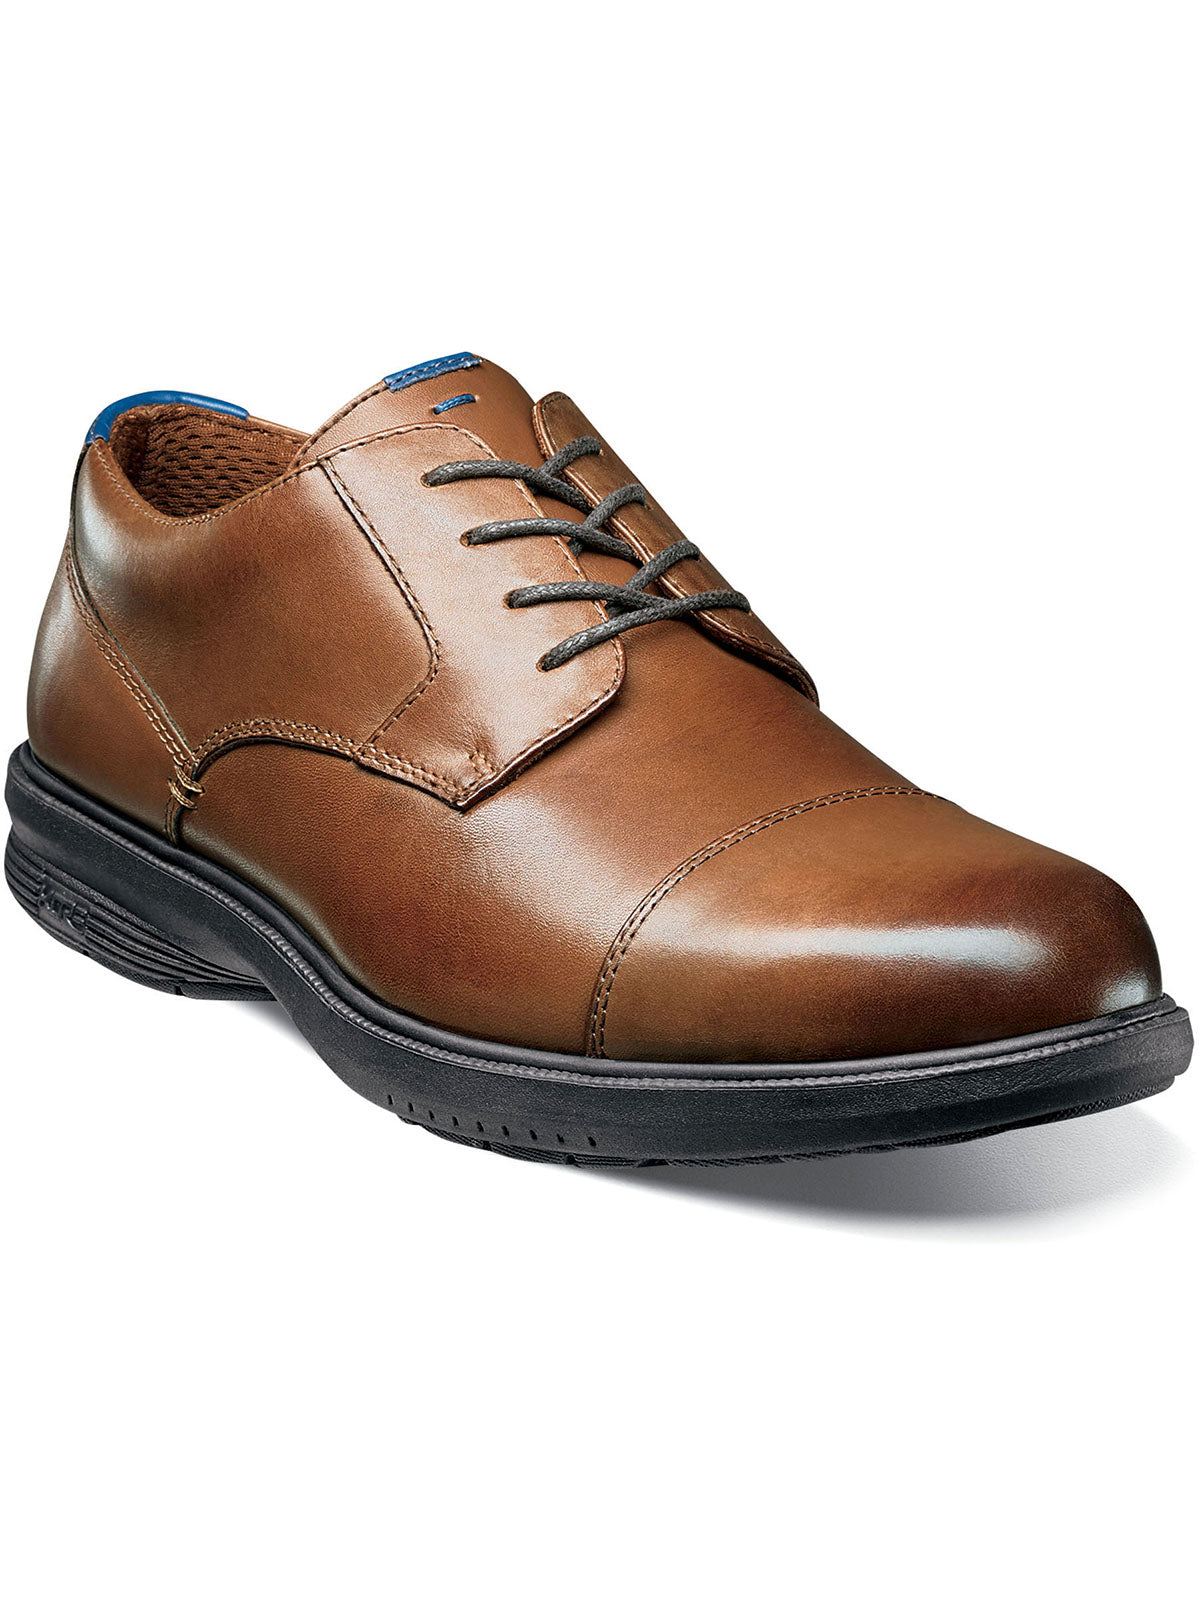 Nunn Bush Melvin Street Cap Toe Oxford Shoes in Tan - Medium Width